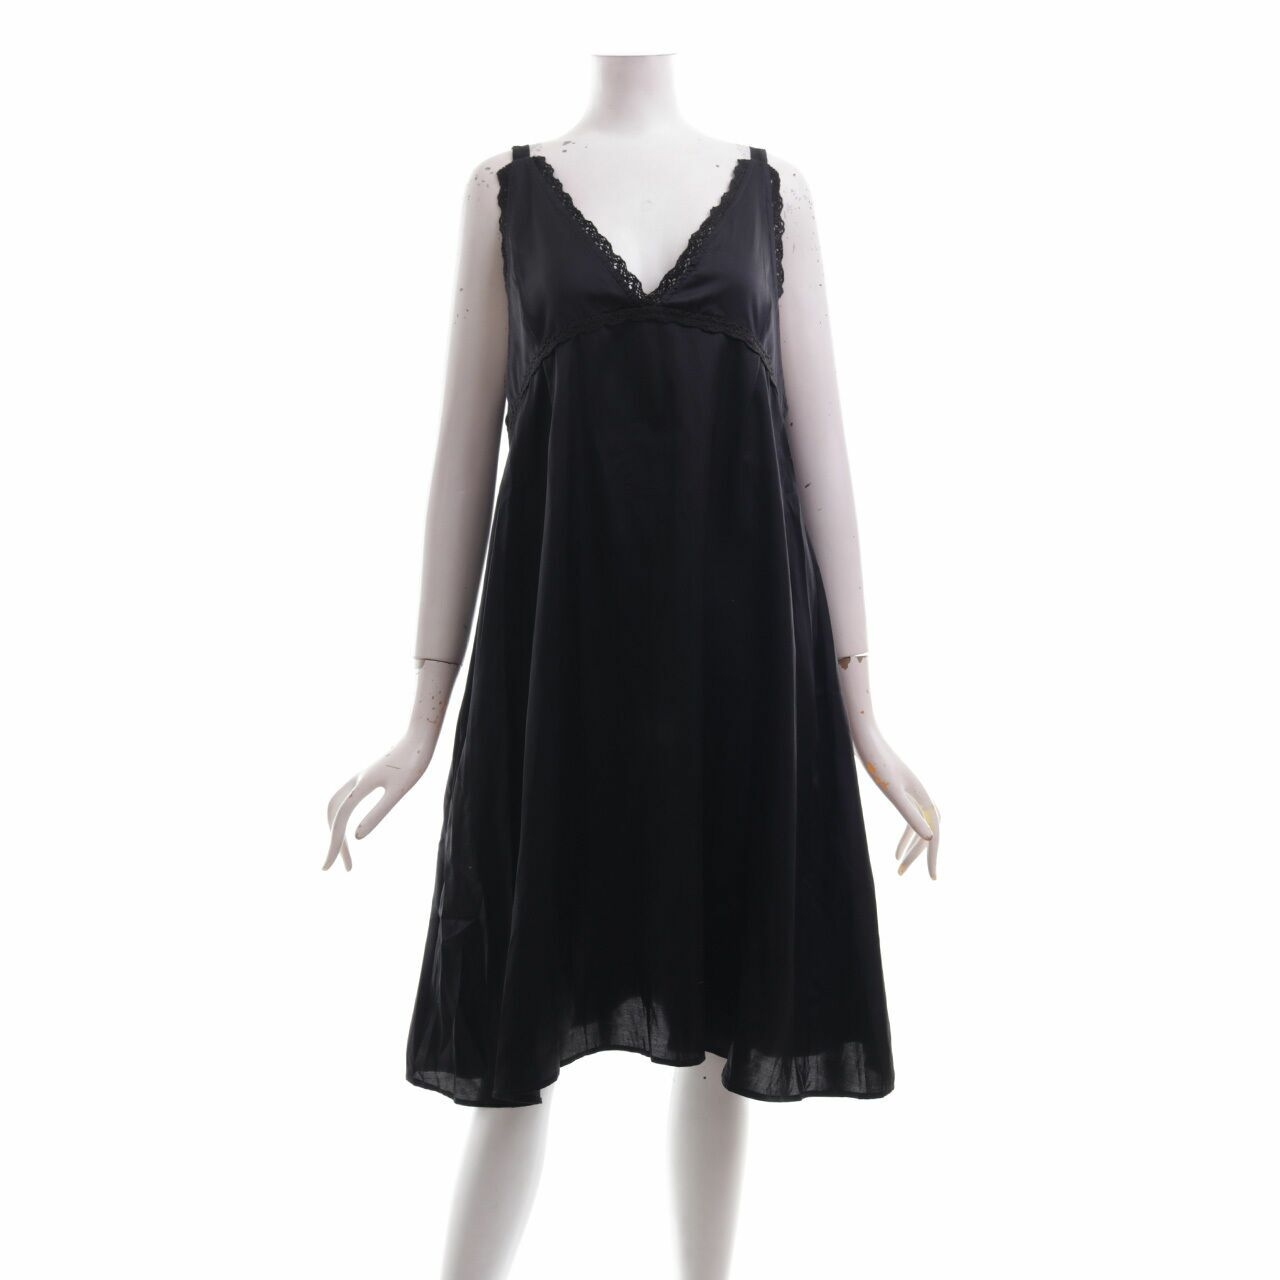 Nikicio White Label Black Midi Dress